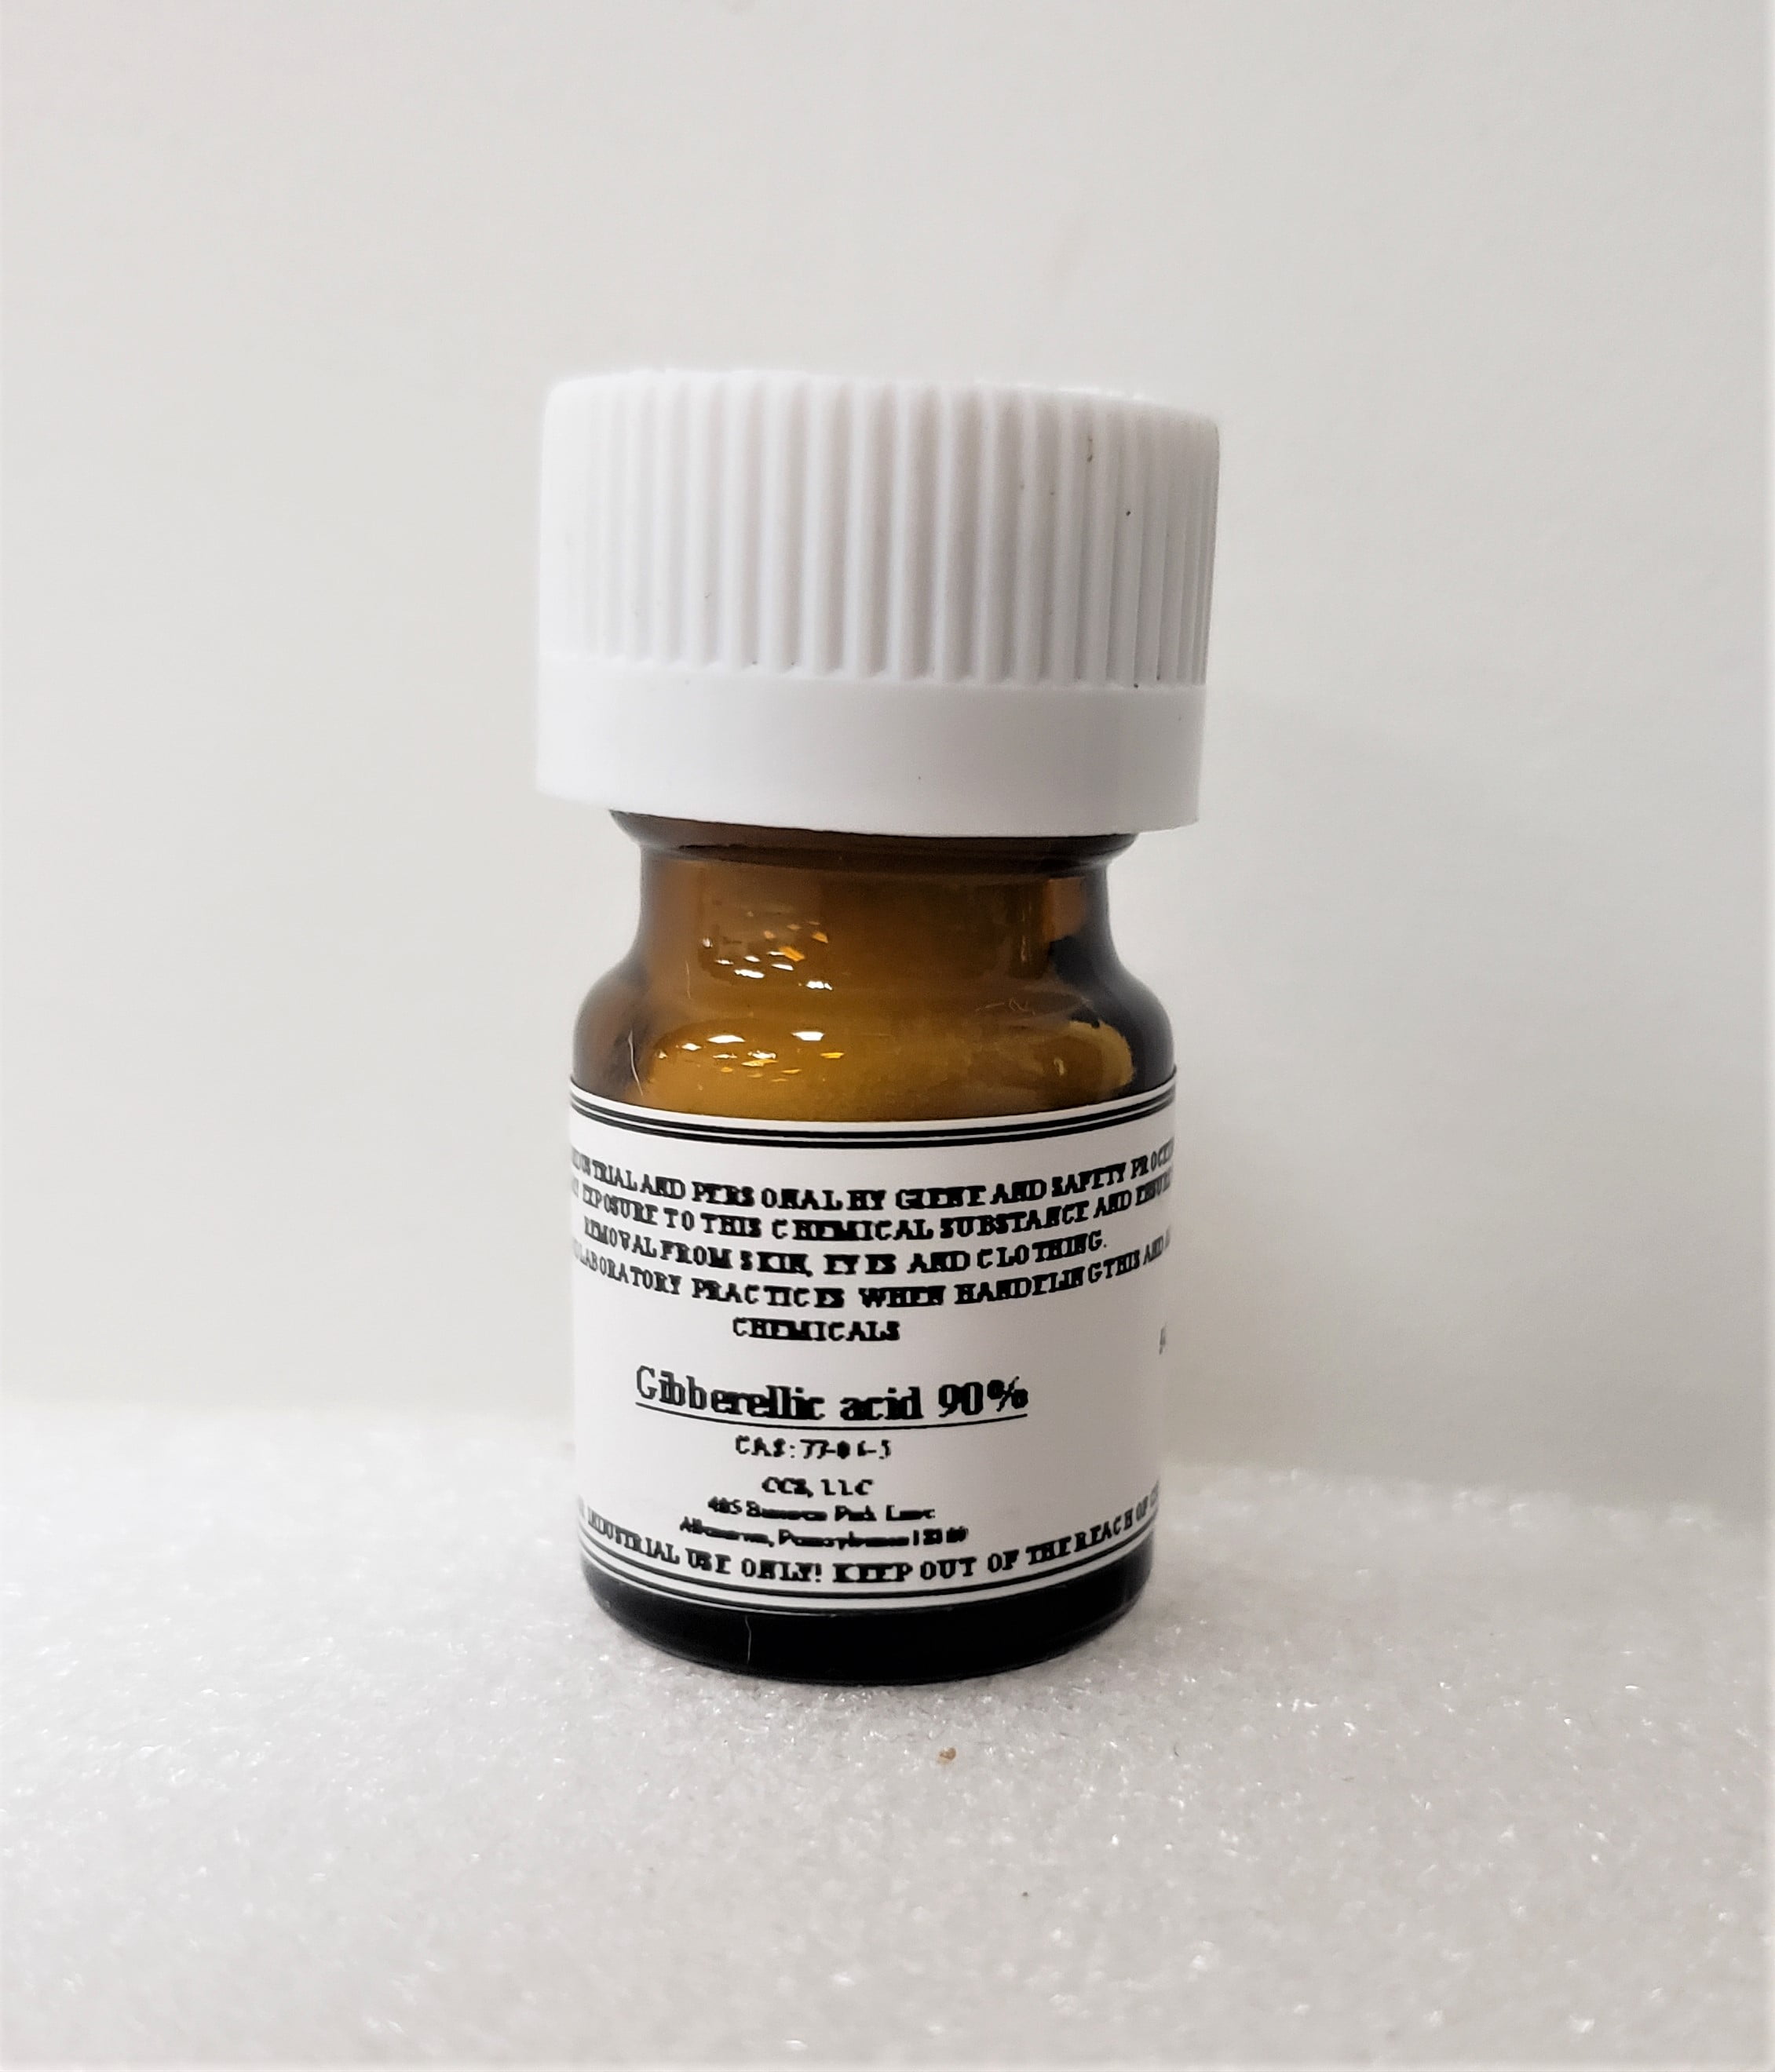 Granular 90% GA3 USA Seller 5g Gibberellic Acid Technical Grade Kit 